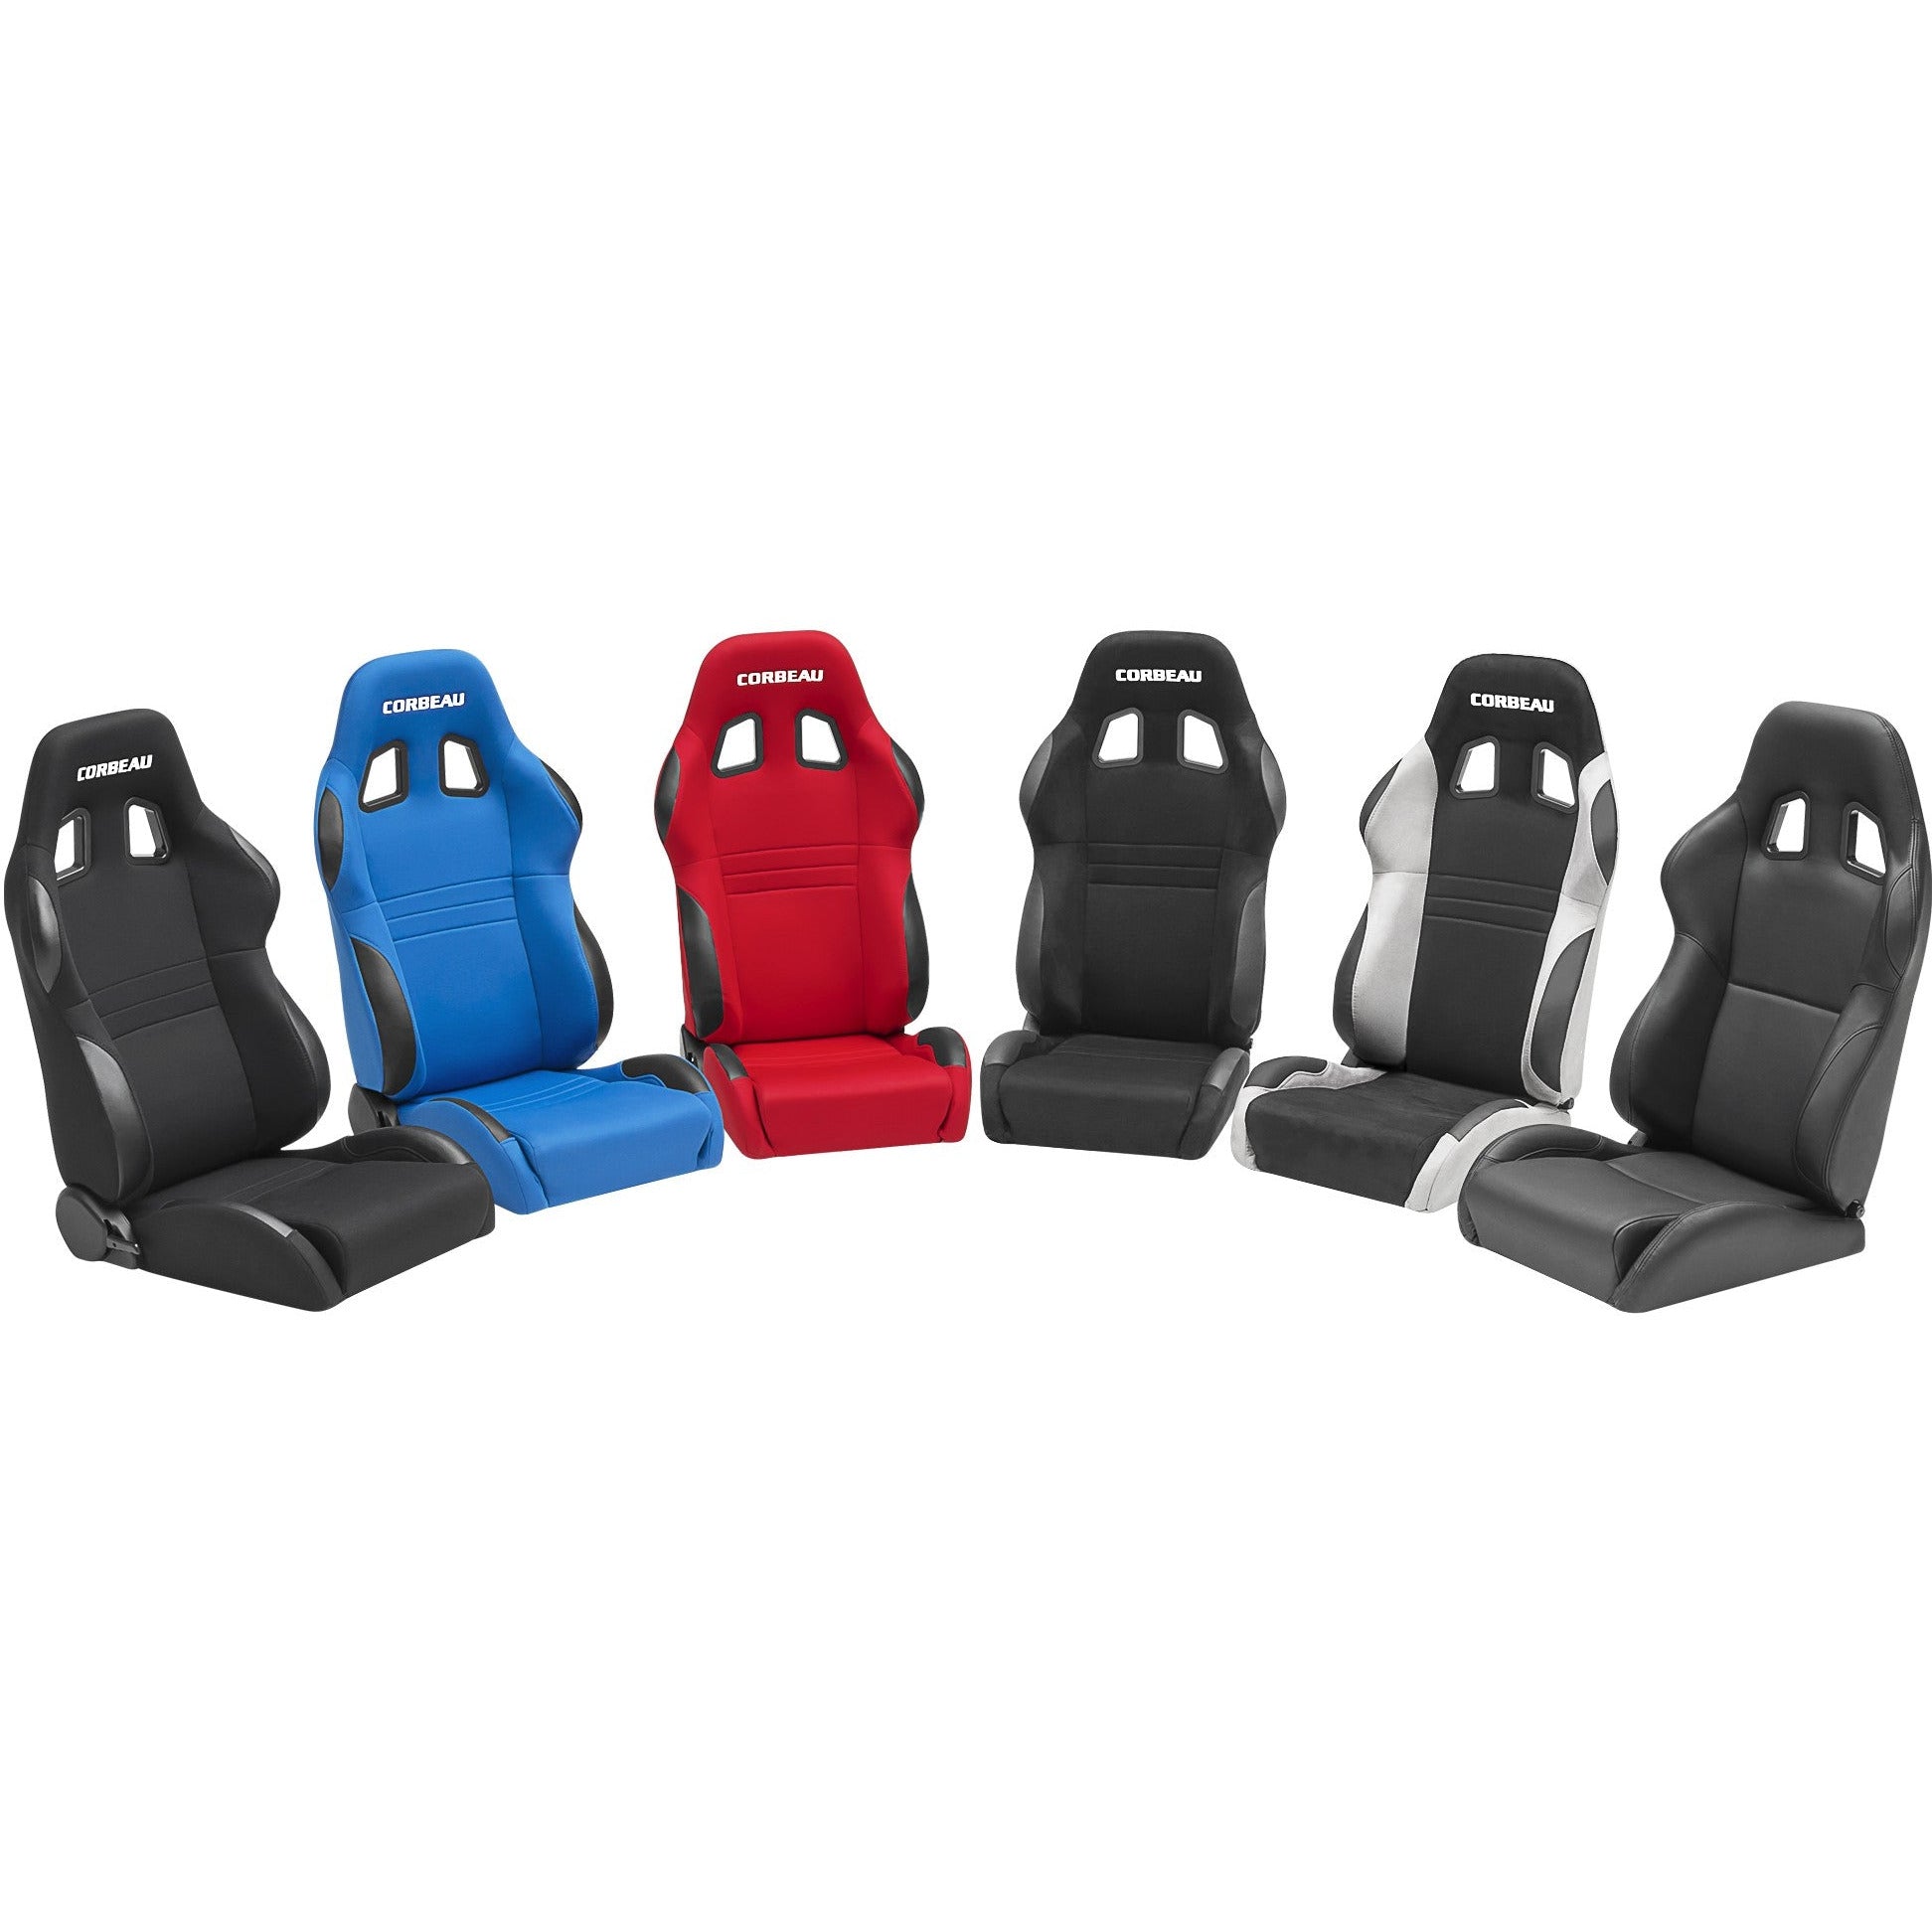 Corbeau A4 Black Leather Seats - UNIVERSAL (Pair) 